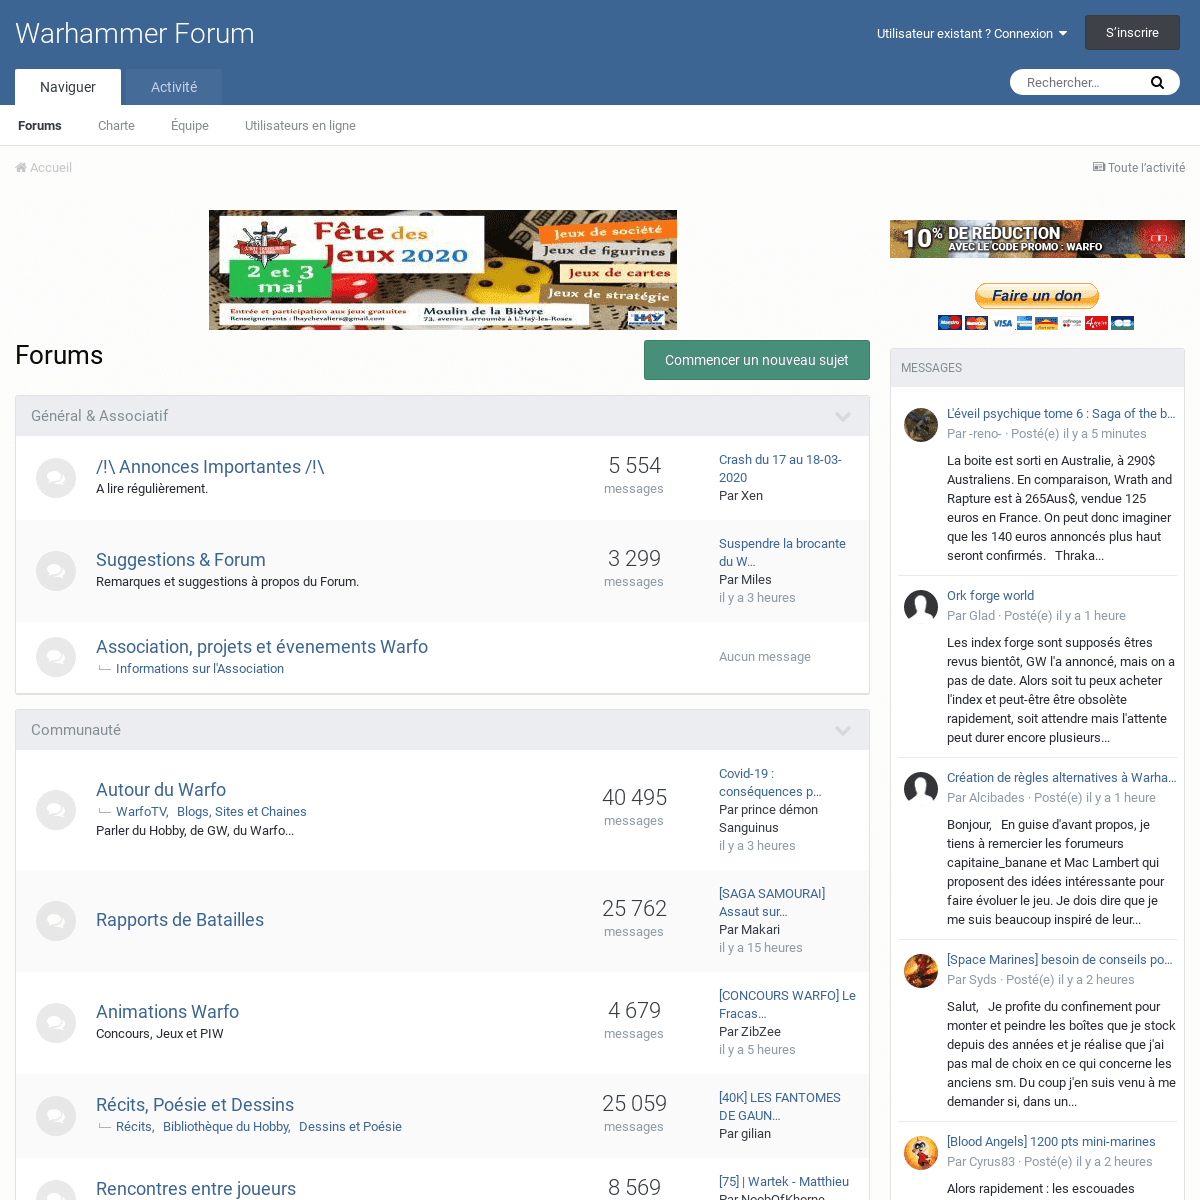 A complete backup of warhammer-forum.com